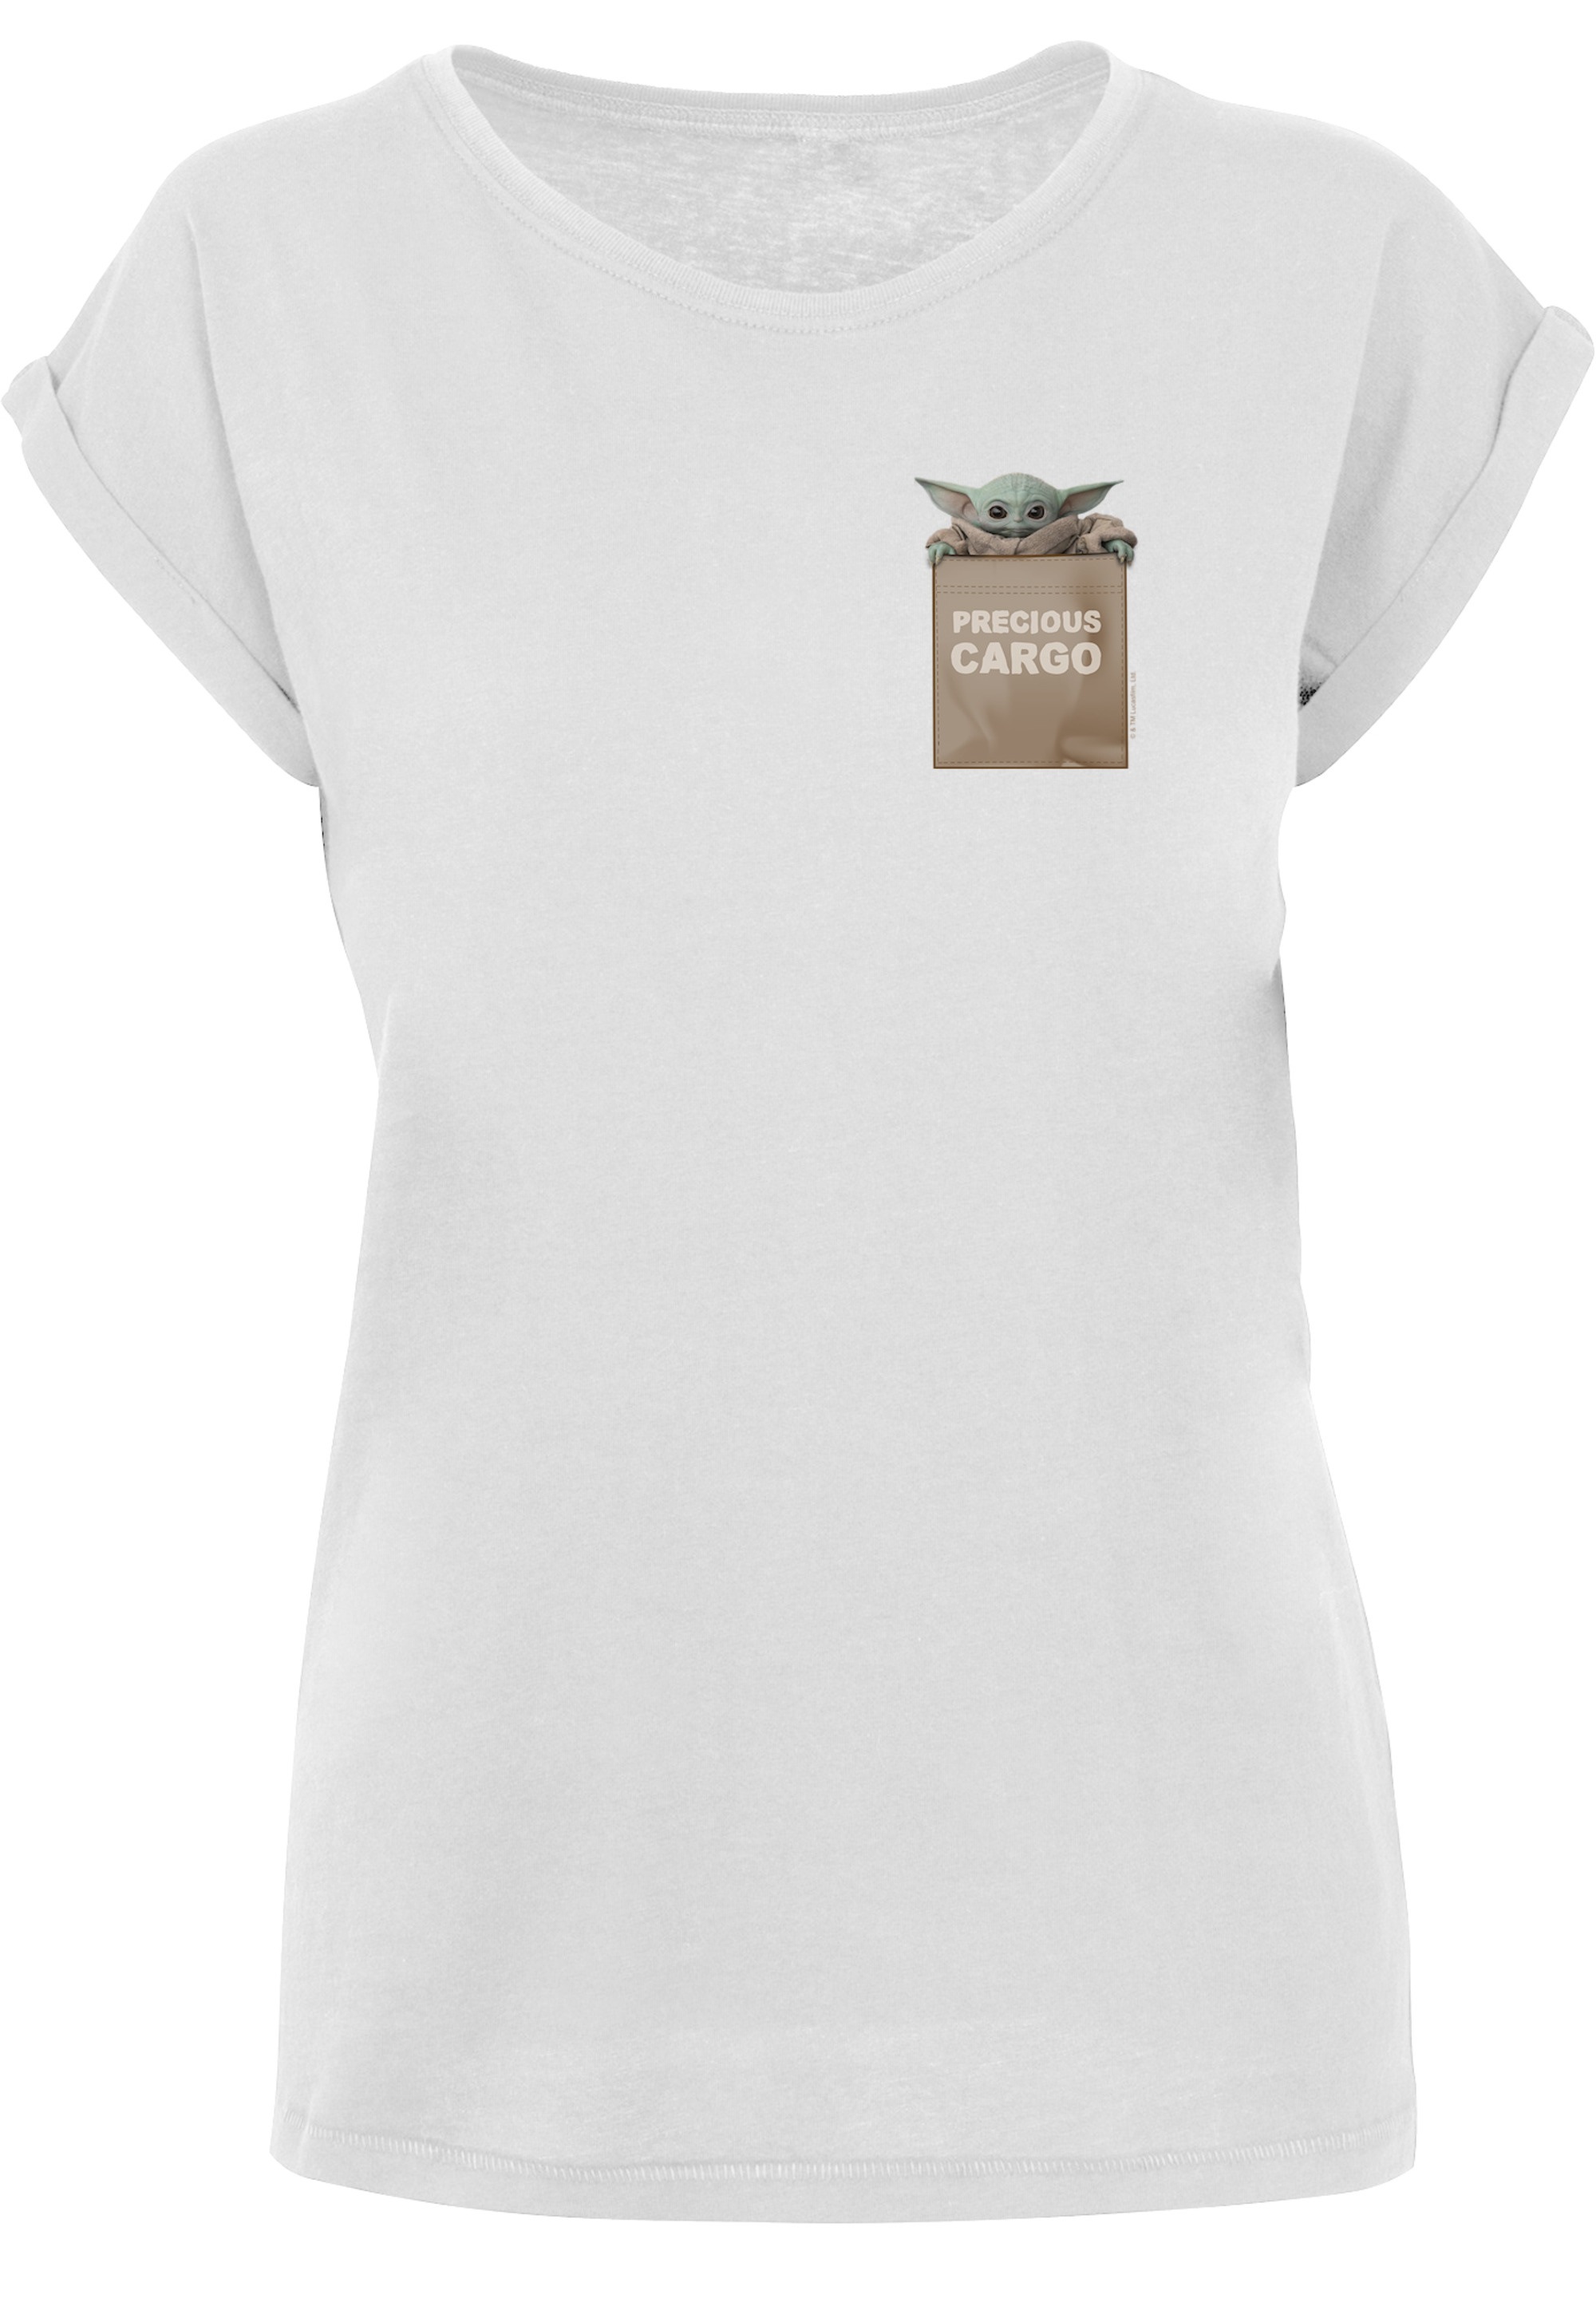 F4NT4STIC T-Shirt »\'Star Wars Mandalorian Das Cargo Grogu Precious Print Kind\'«, bestellen